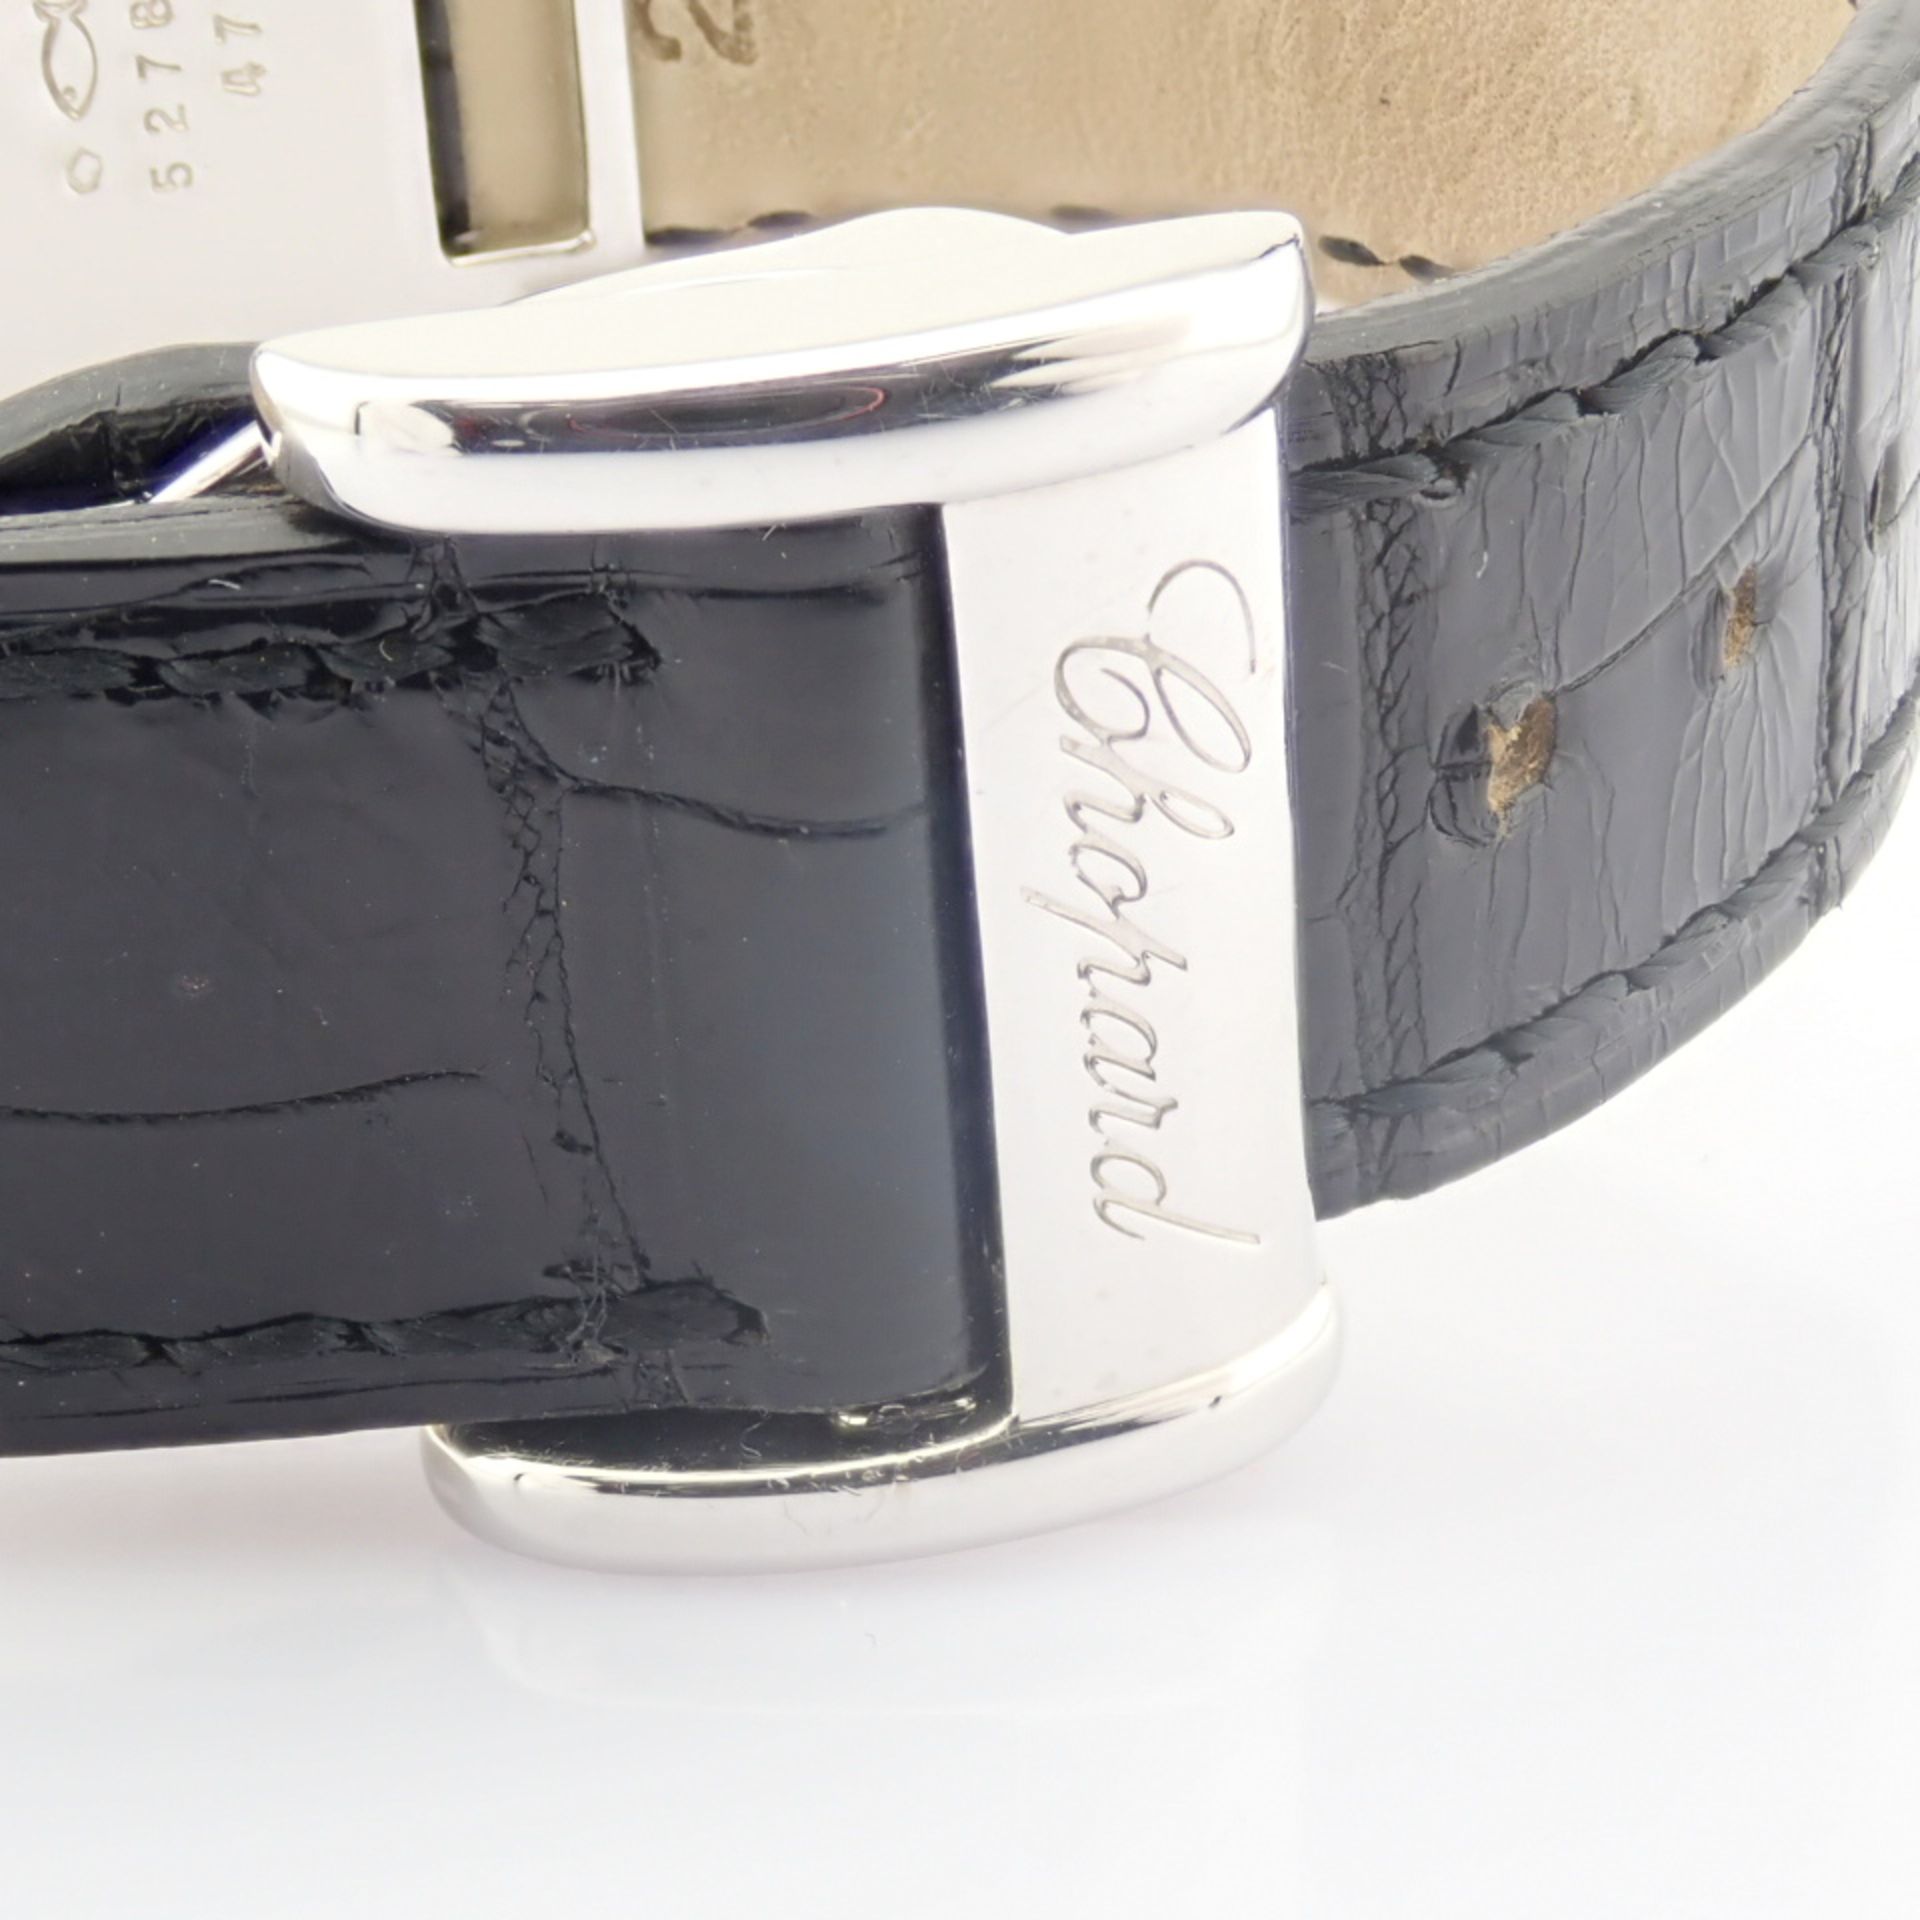 Chopard / La Strada - Lady's 18K White Gold Wrist Watch - Image 13 of 13